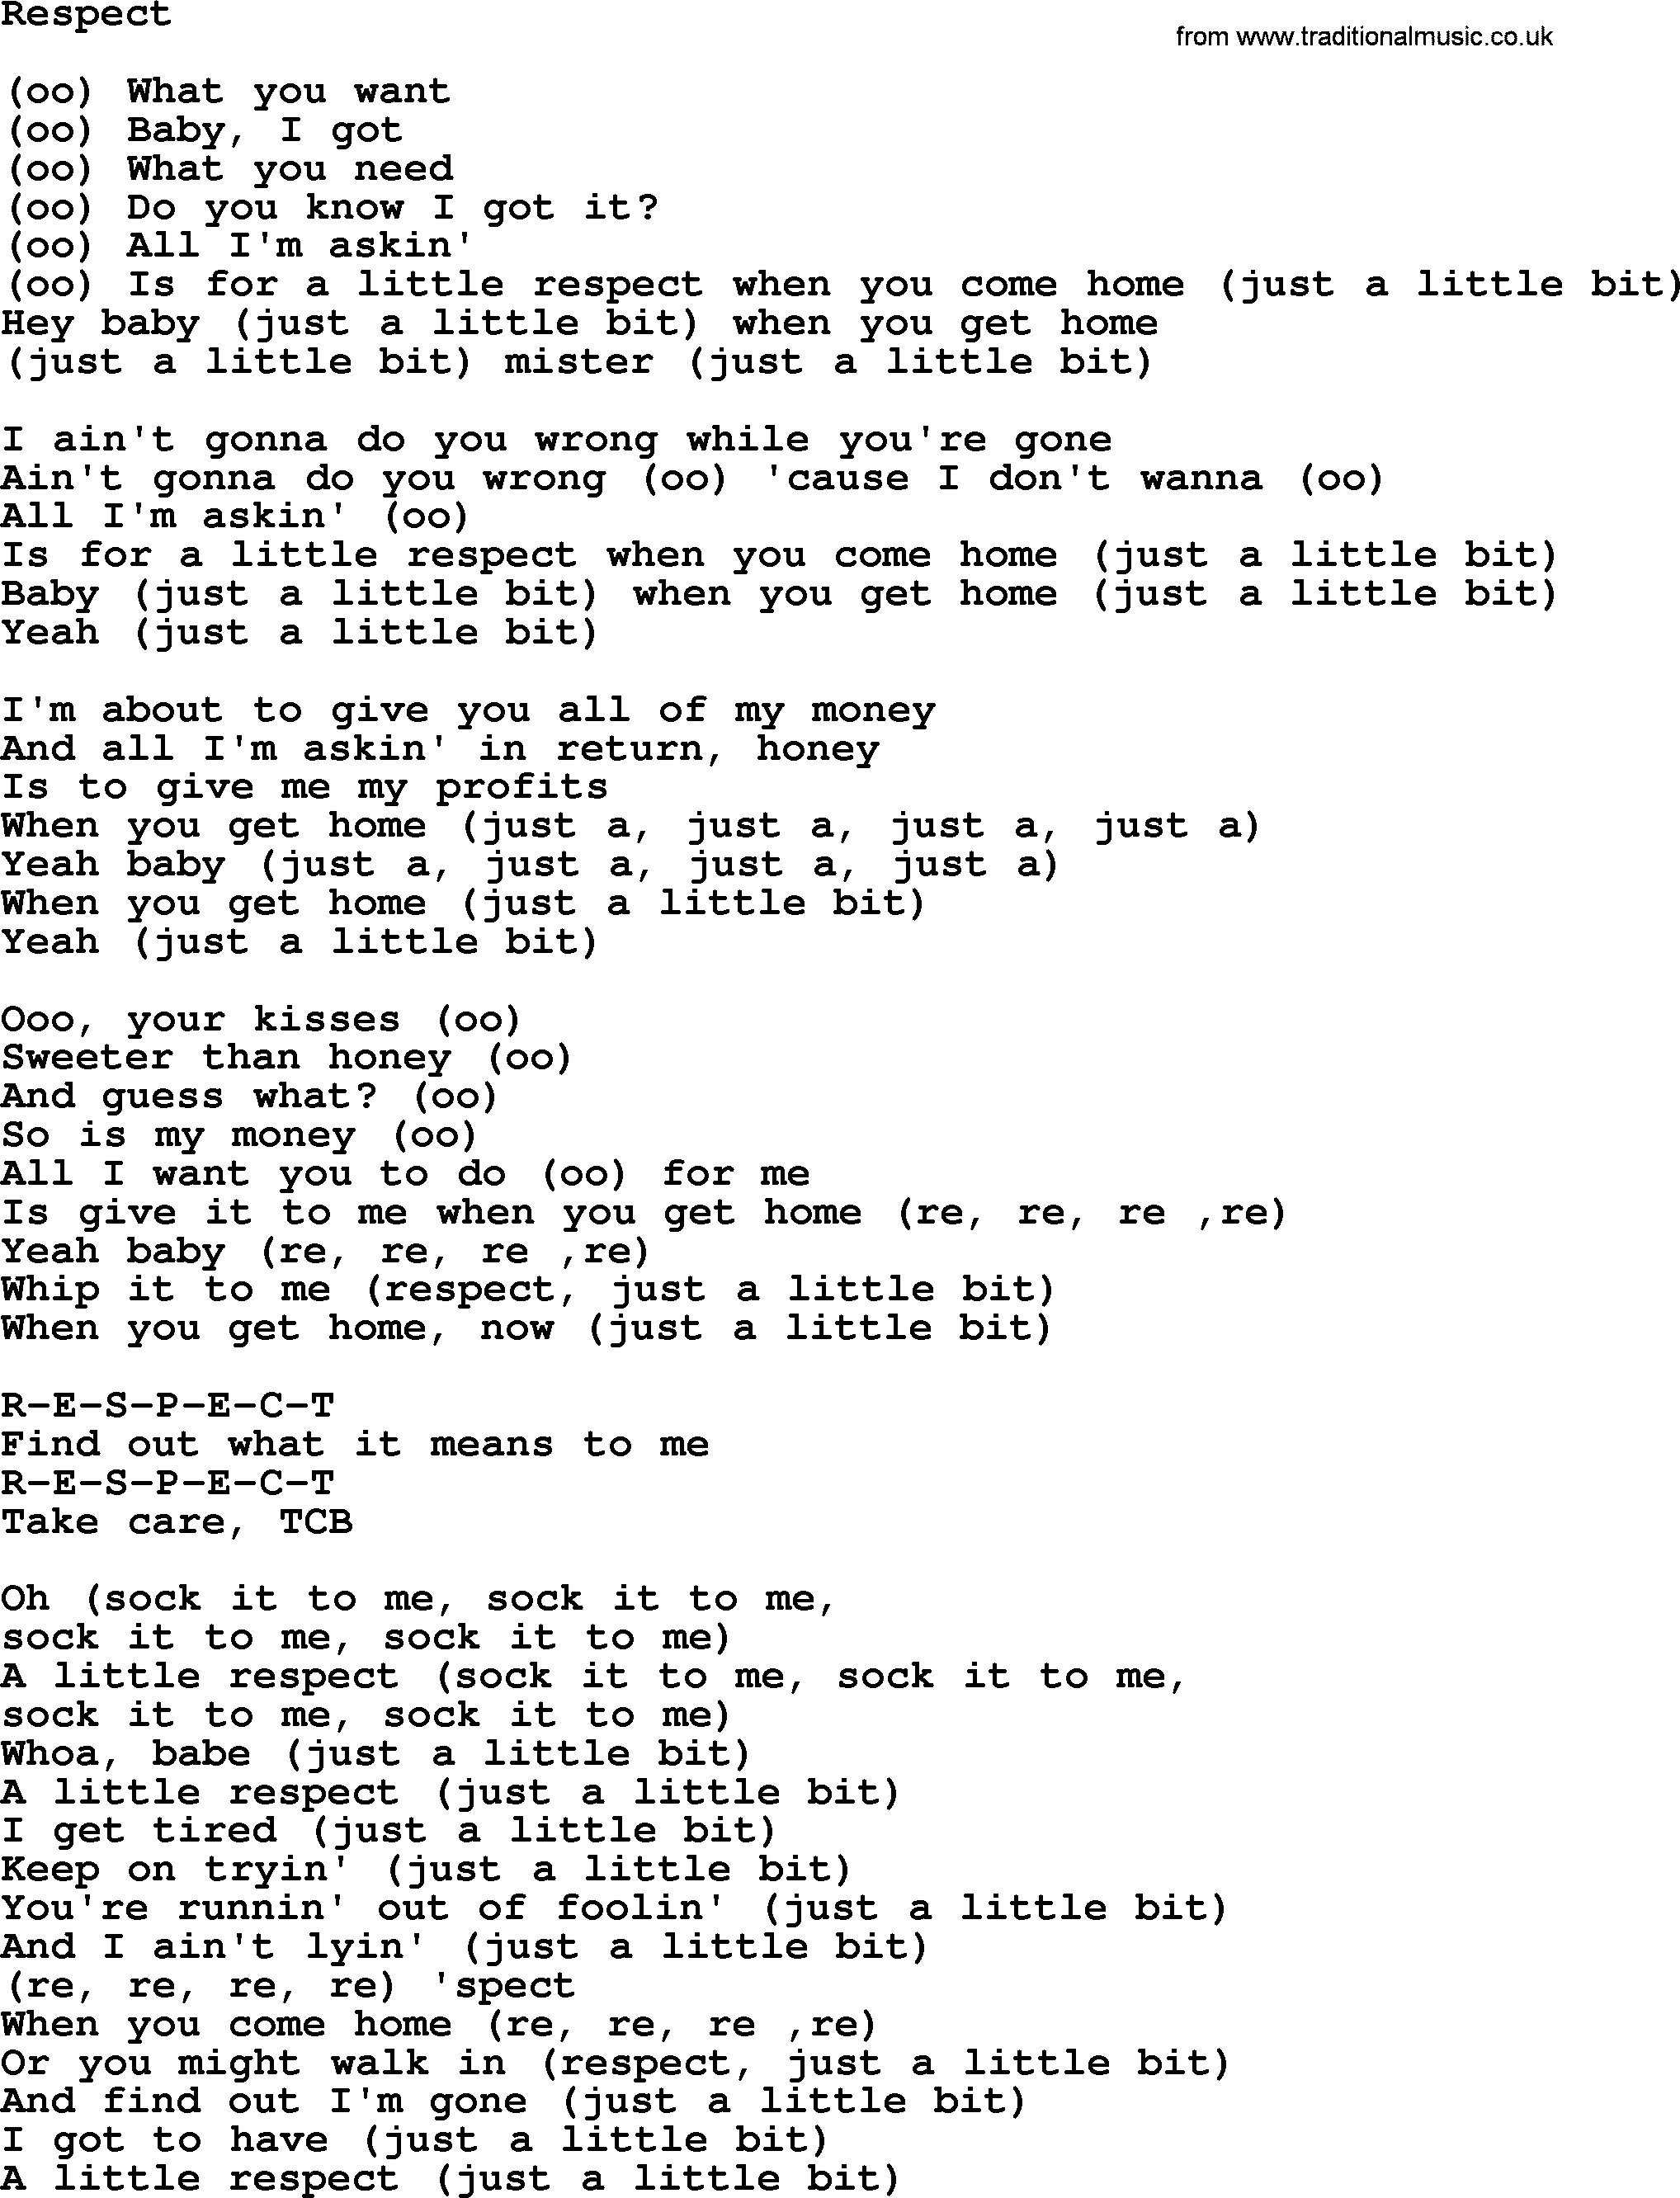 The Byrds song Respect, lyrics